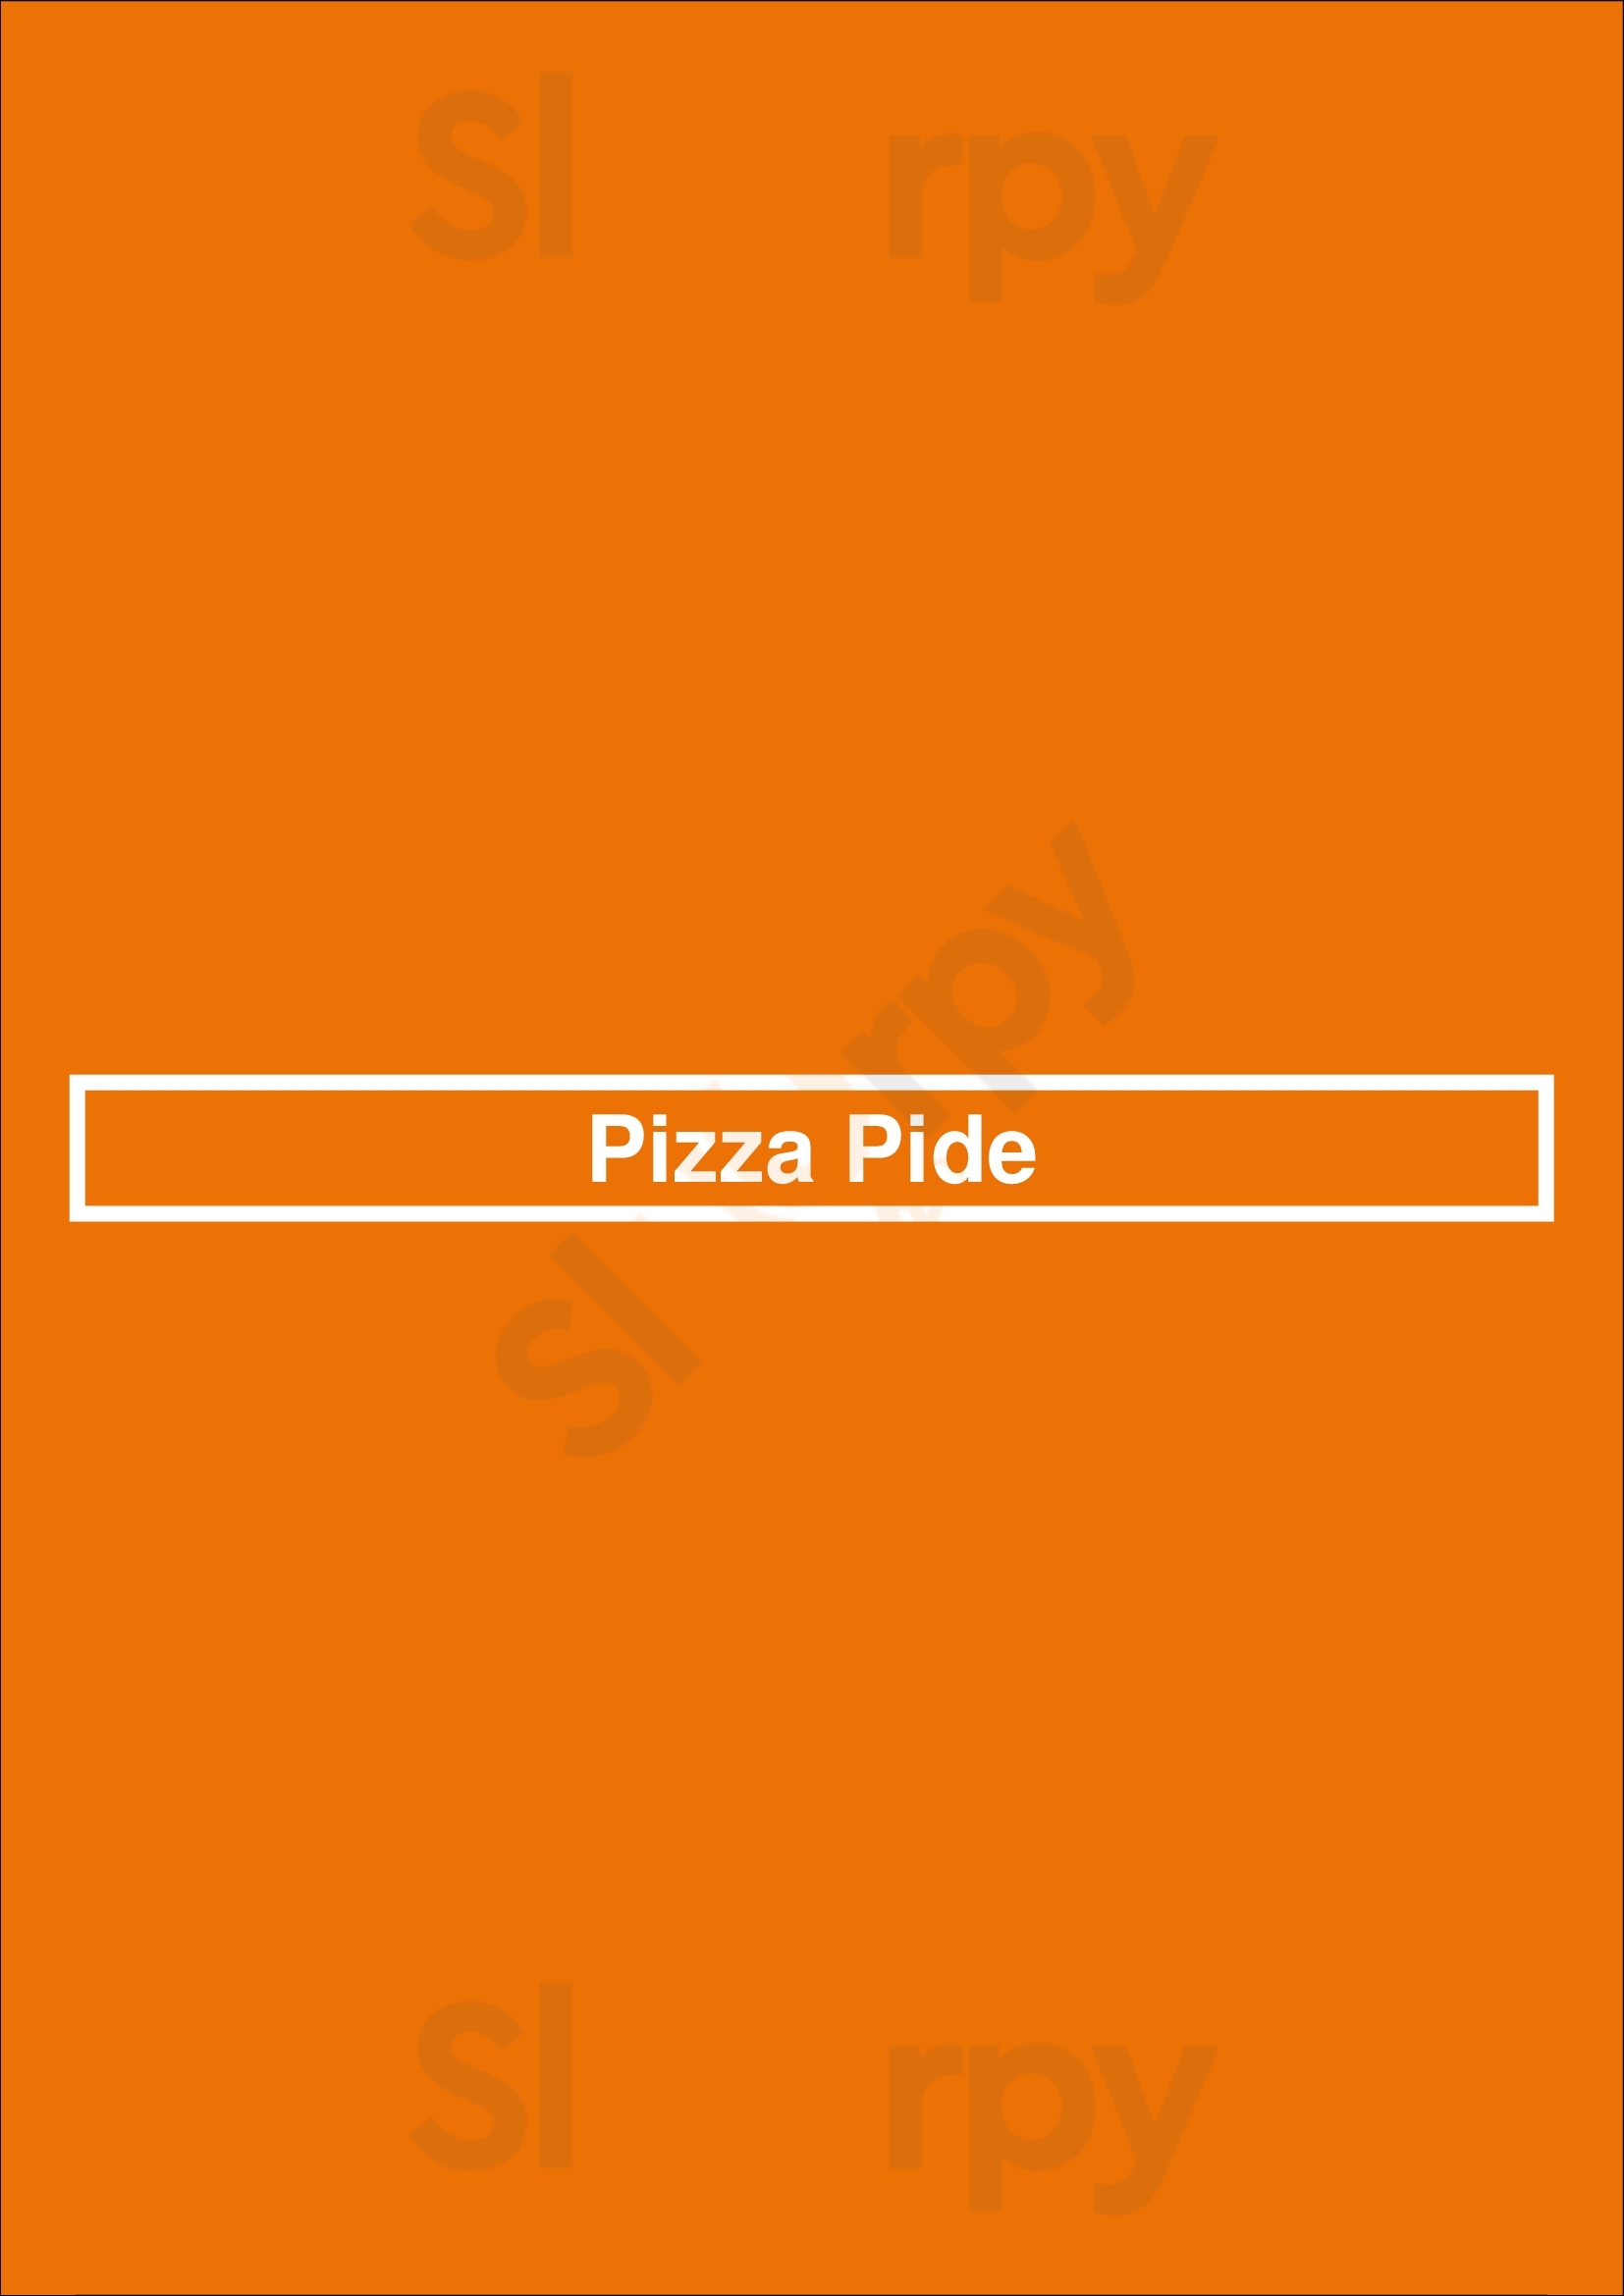 Pizza Pide Toronto Menu - 1